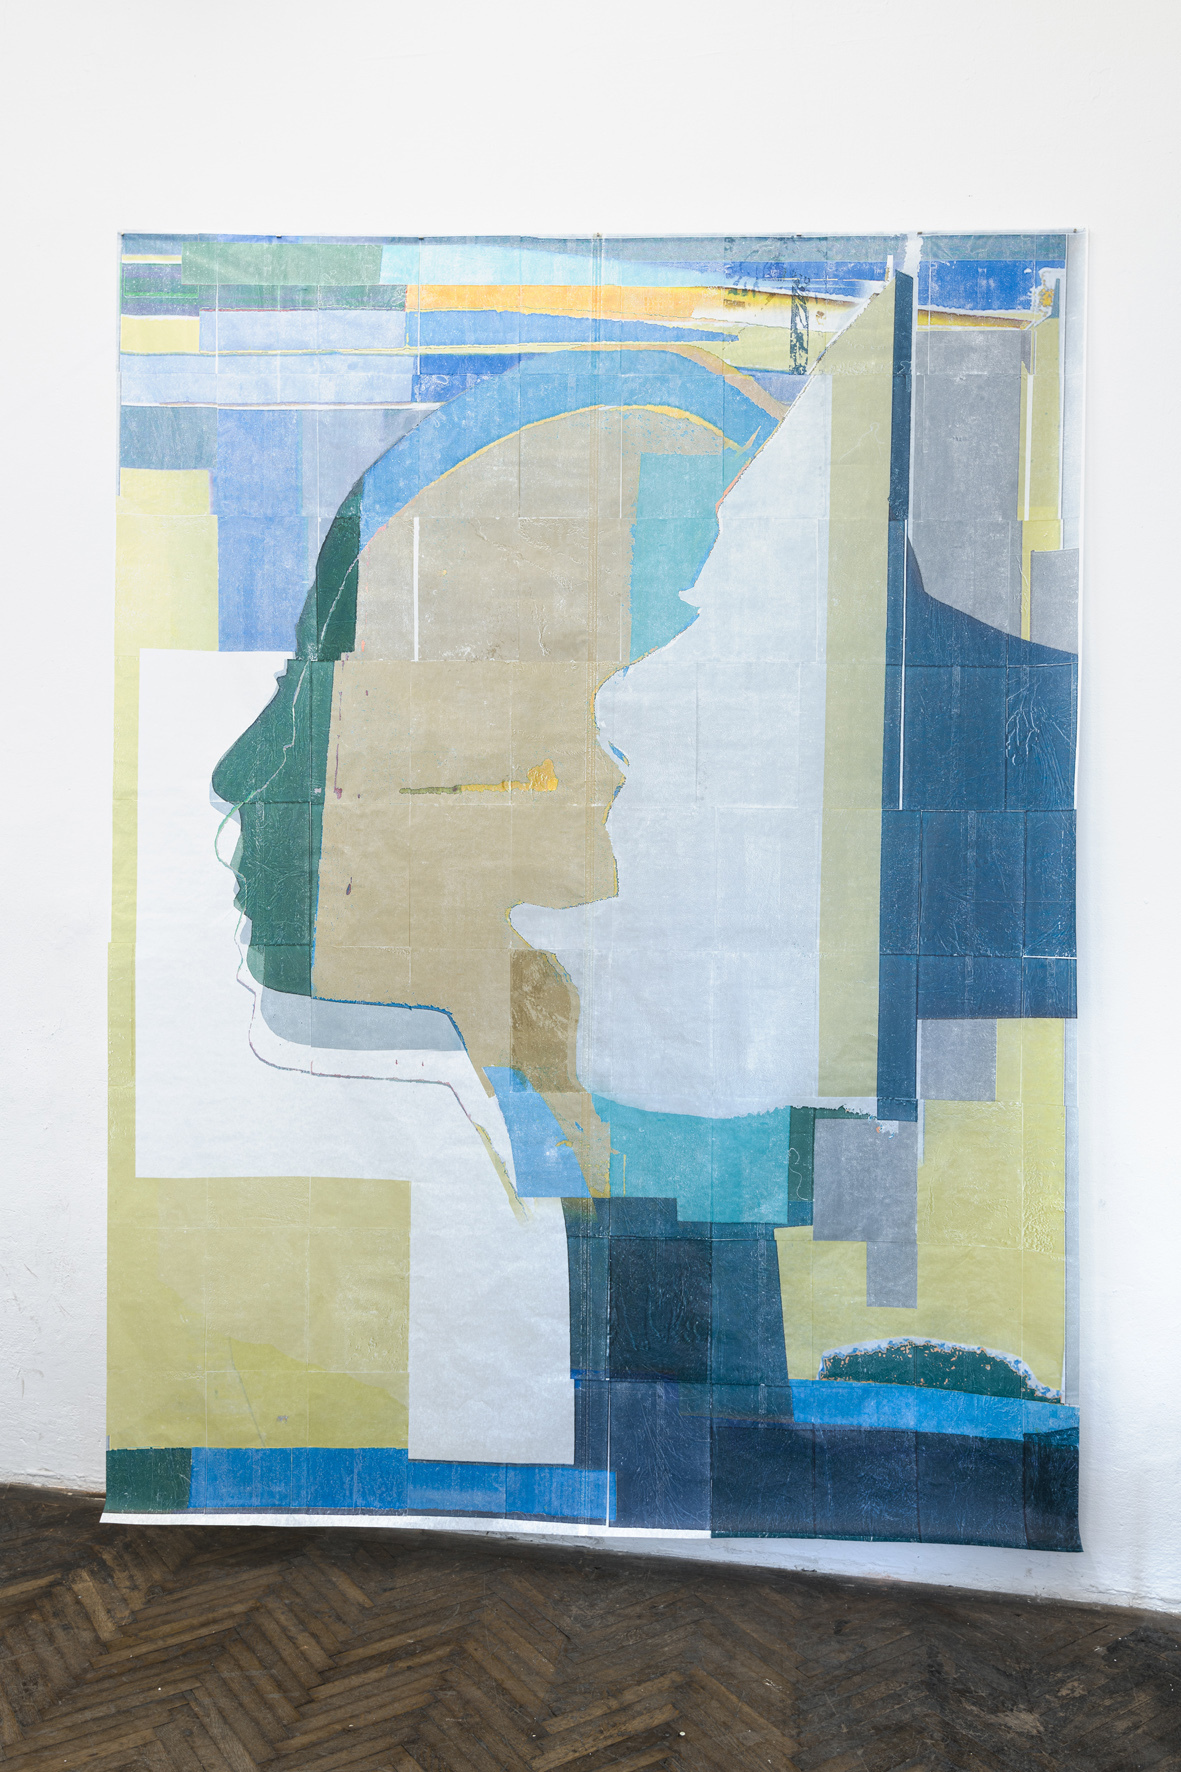 Sarah Lehnerer, She turned her head, 2020, frottage, ink on tissue paper, 250 x 180cm